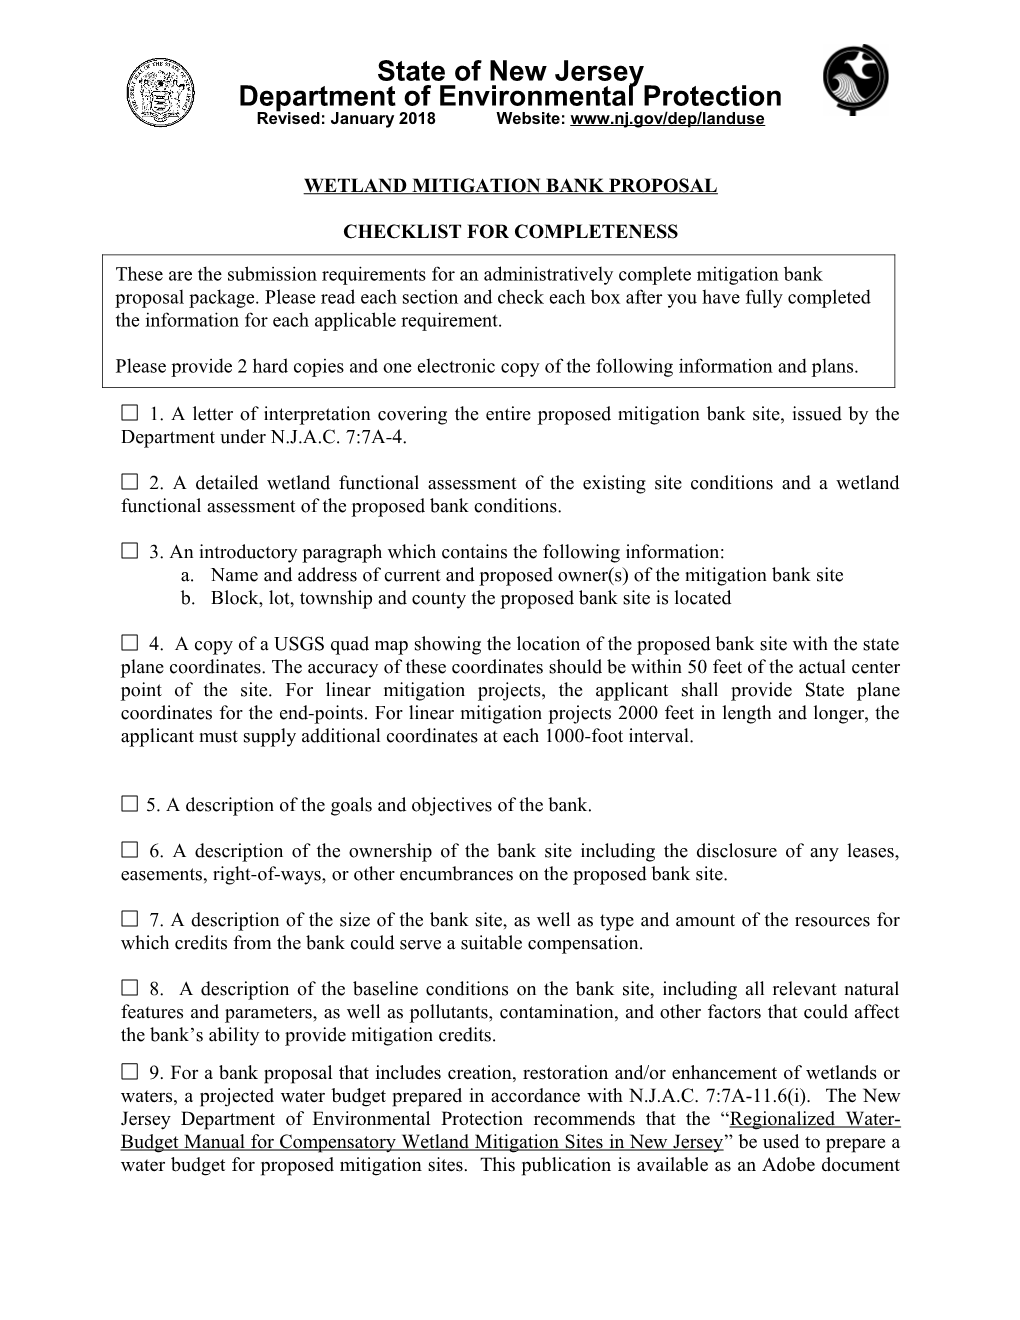 Weland Mitigation Bank Proposal